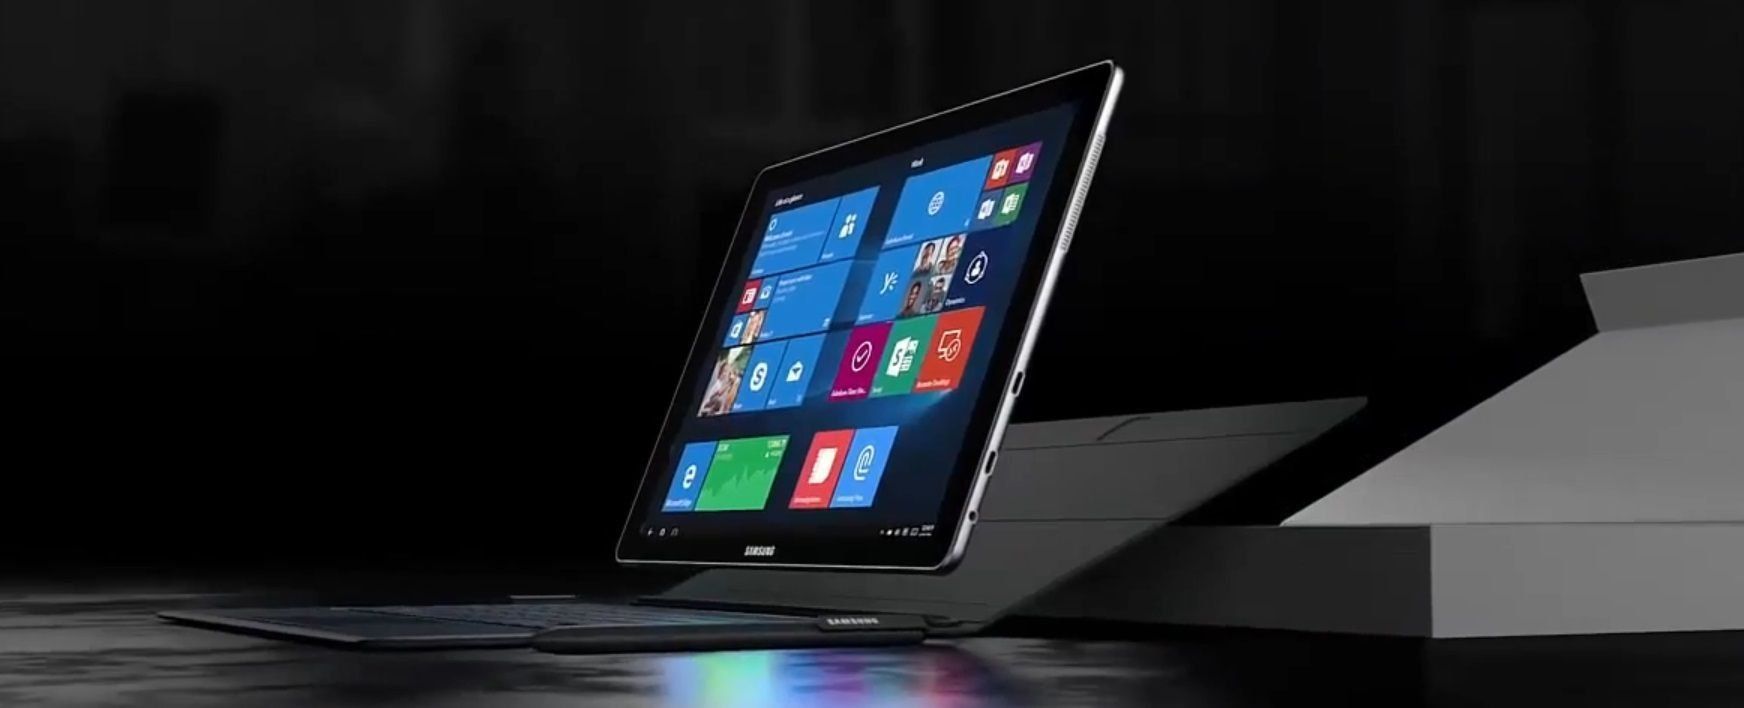 Tabletový počítač Samsung Galaxy Book2 v systéme Windows - výhody a nevýhody